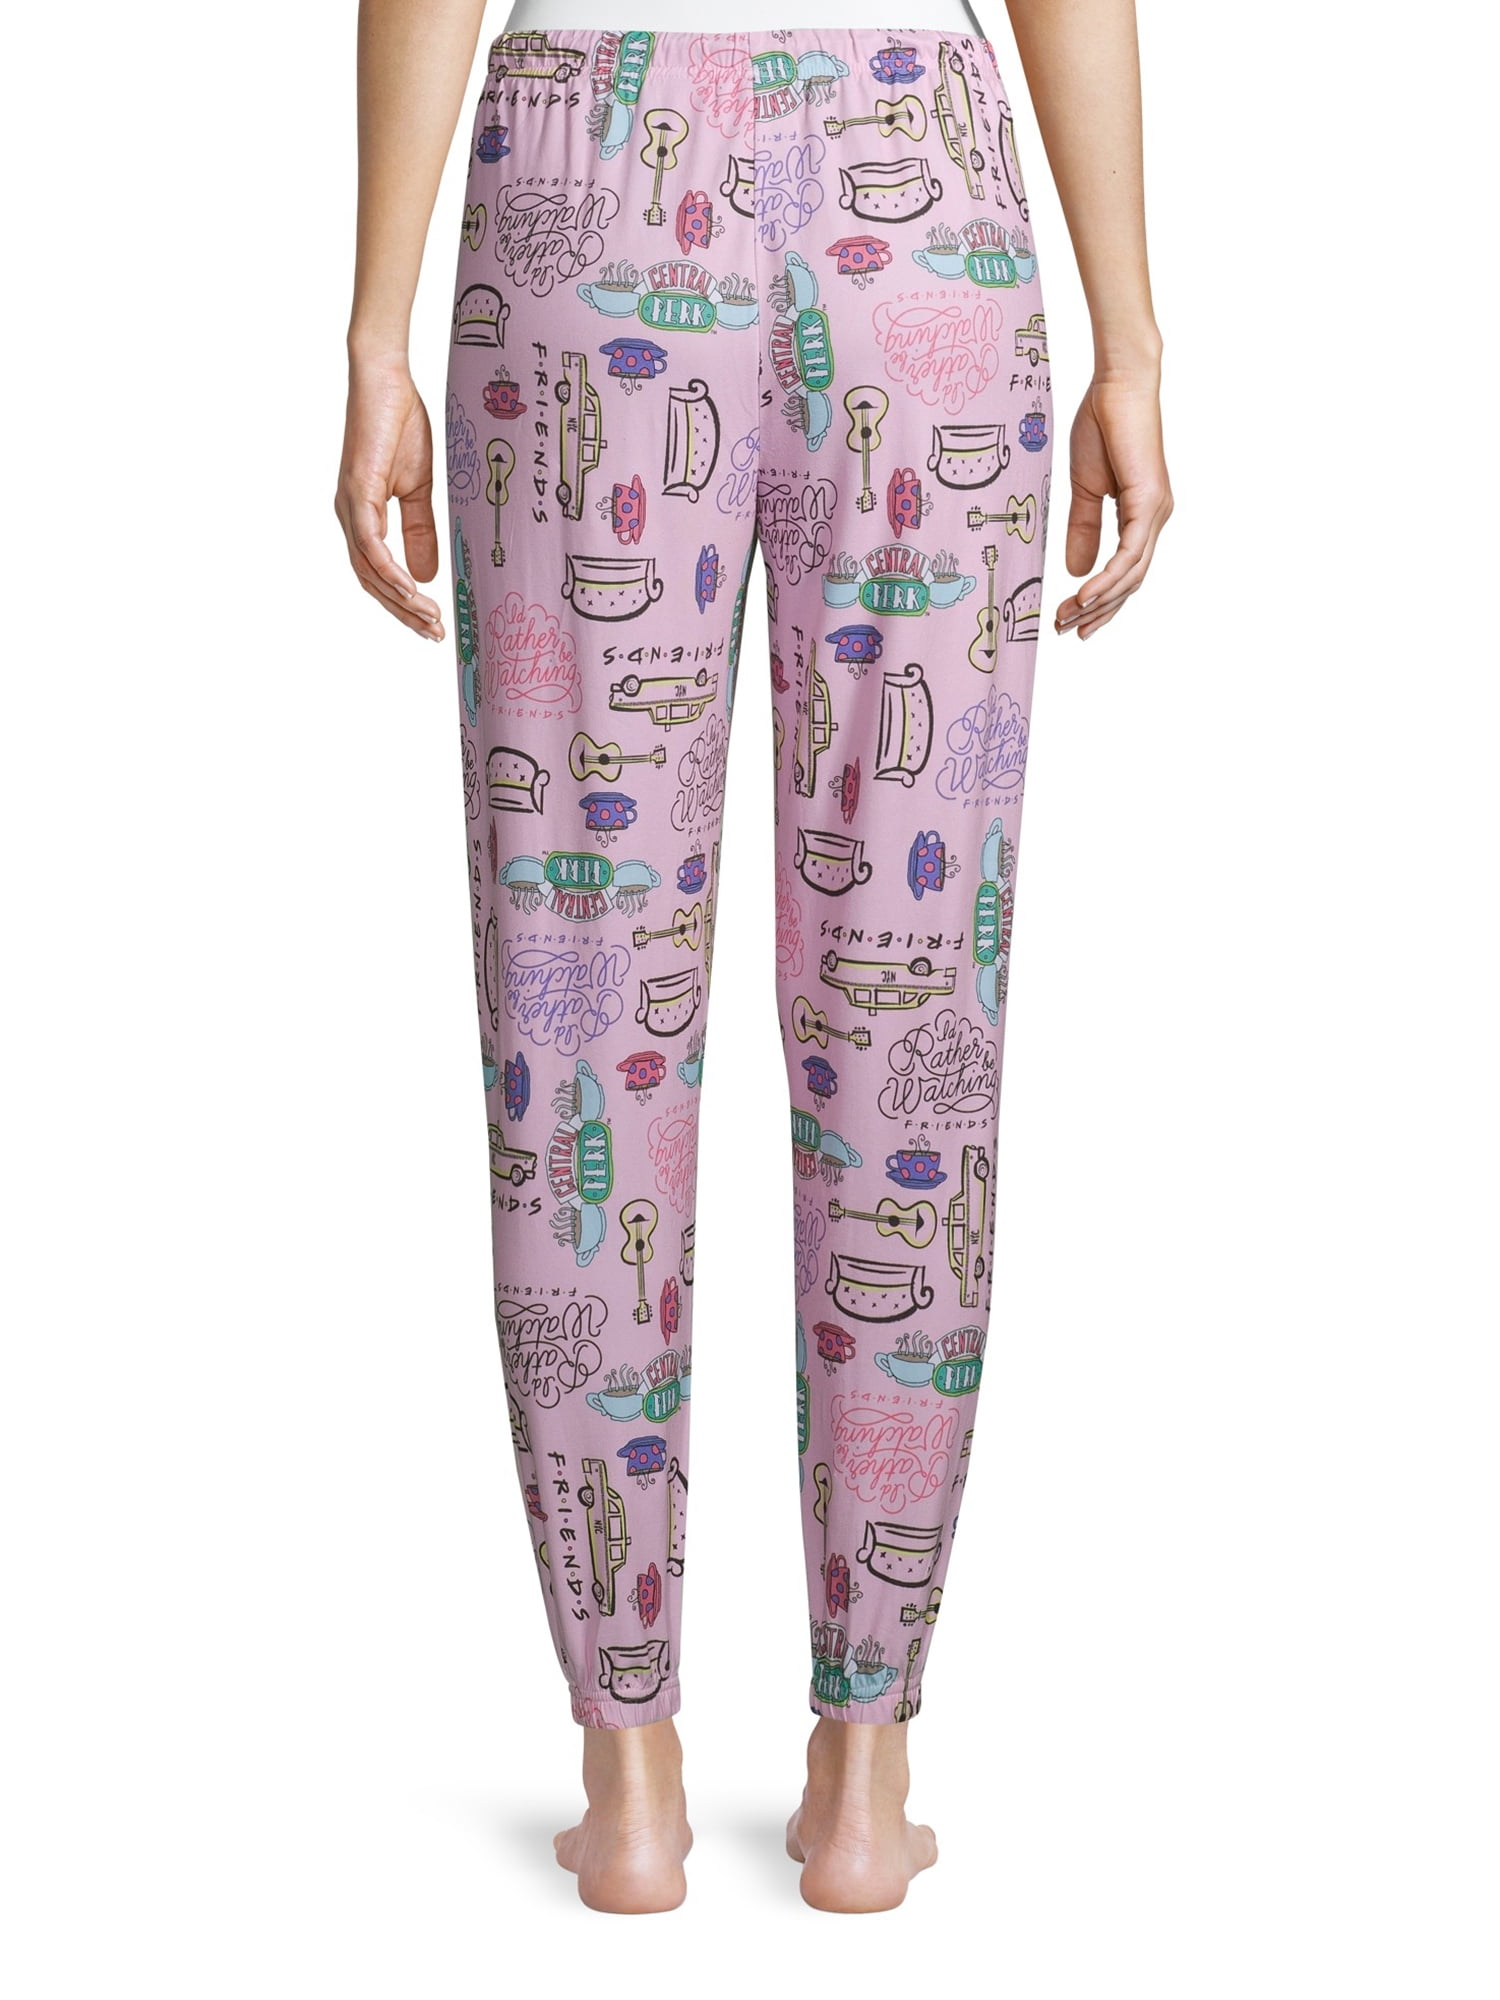 Friends The Television Series Women039s Pink Sleepwear Pajama Pants NEW  Size 3X  eBay